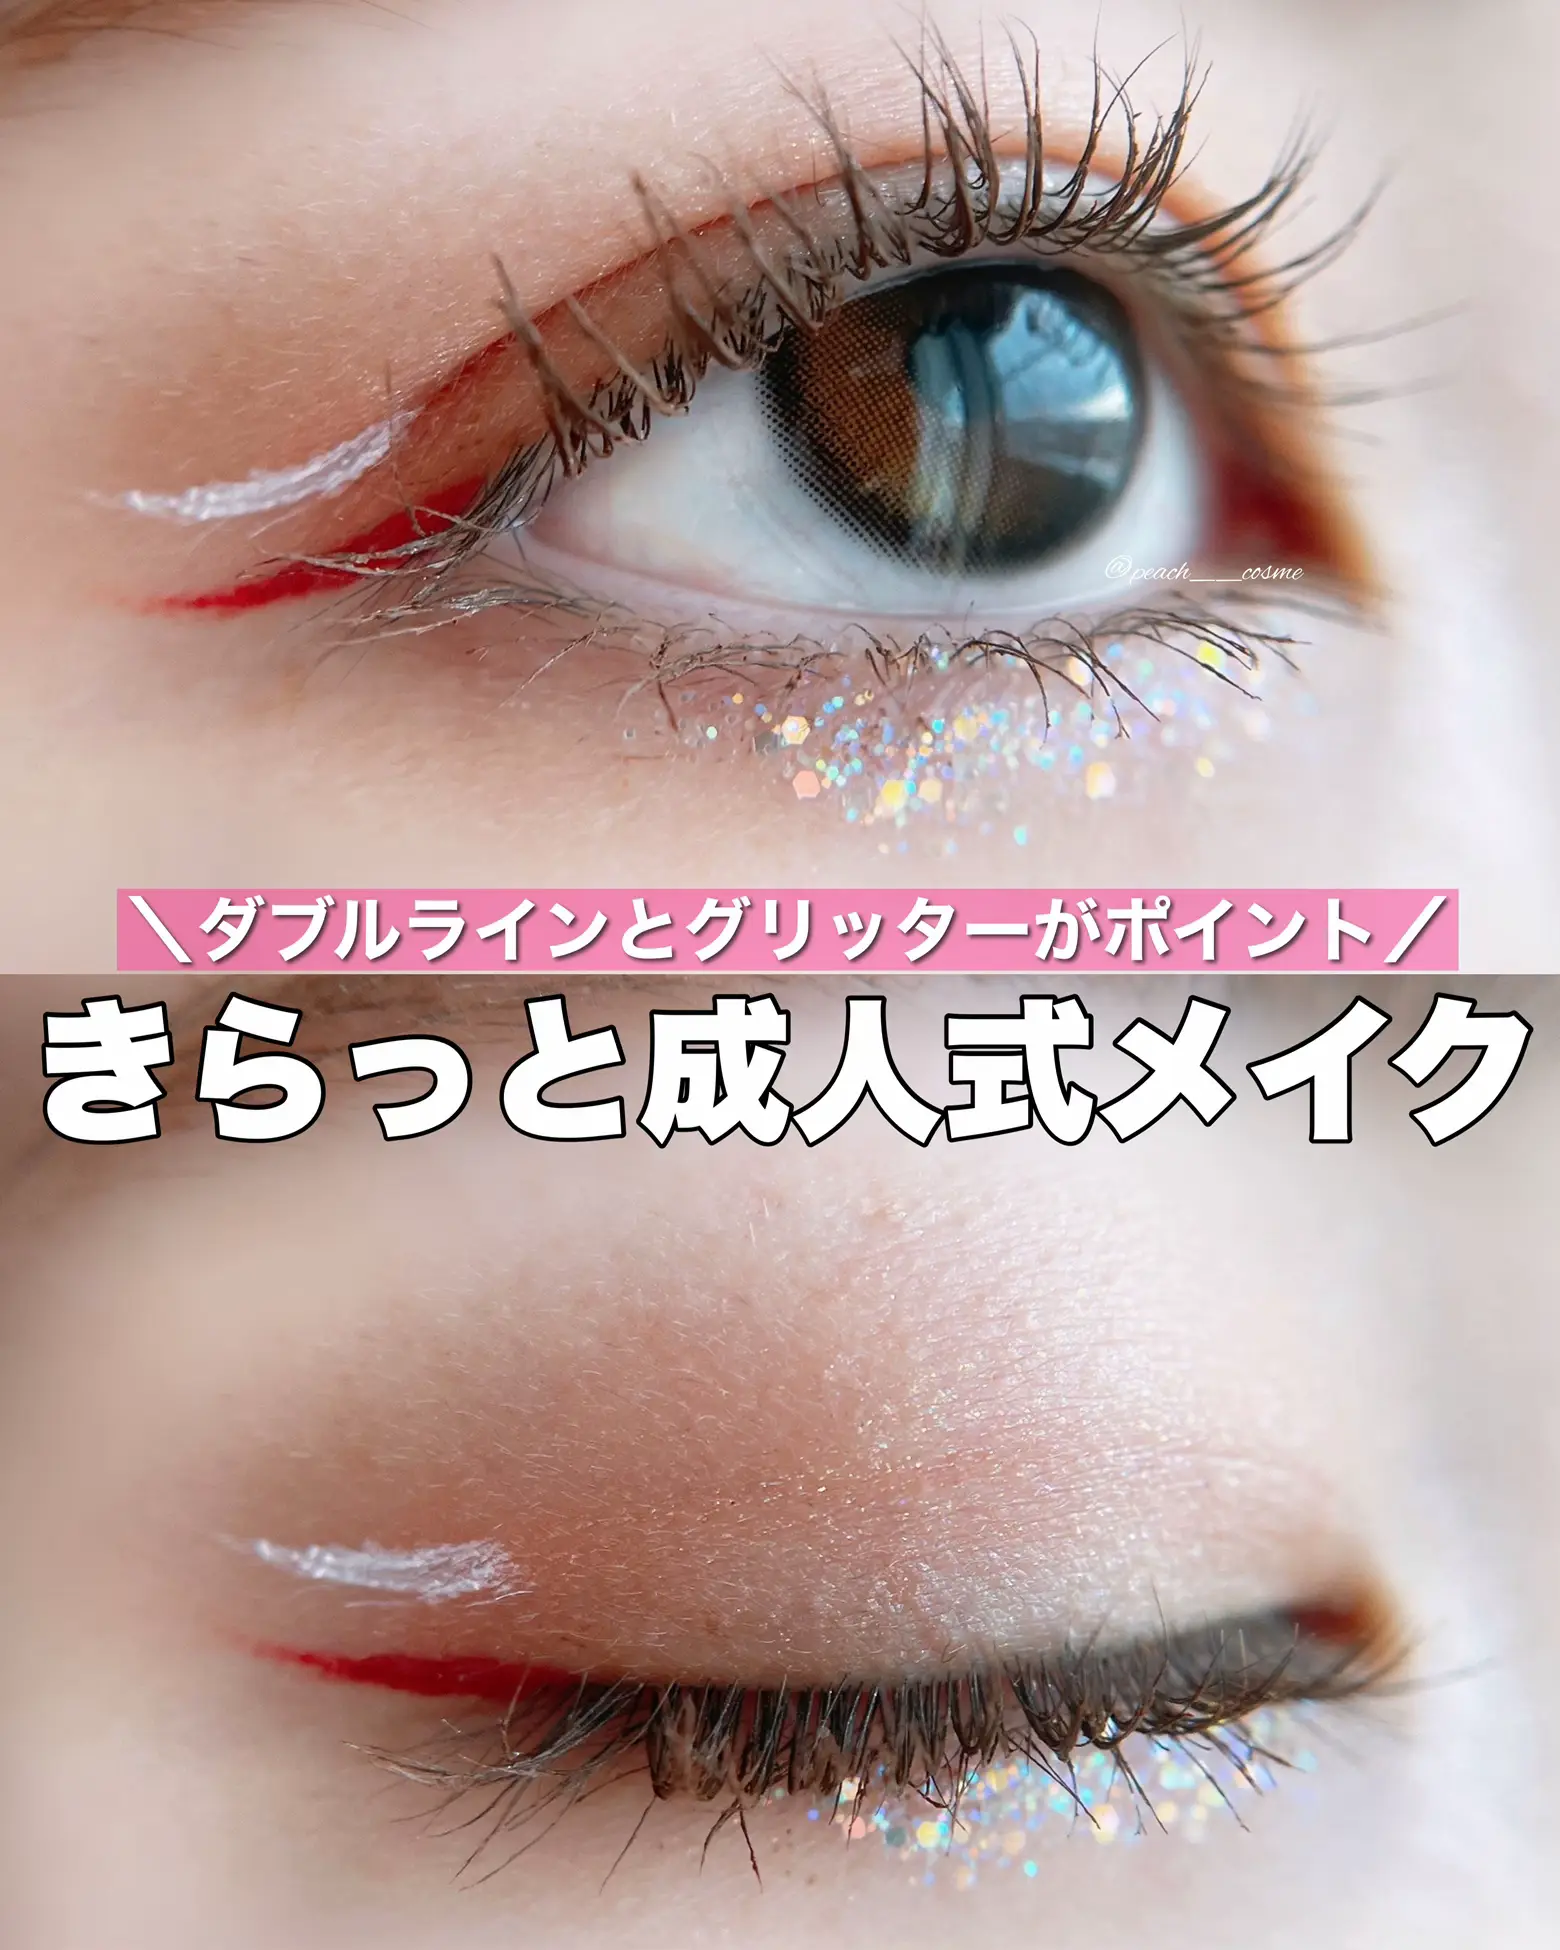 47 Cute Makeup Looks to Recreate : Peach Eyeshadow + Black Graphic